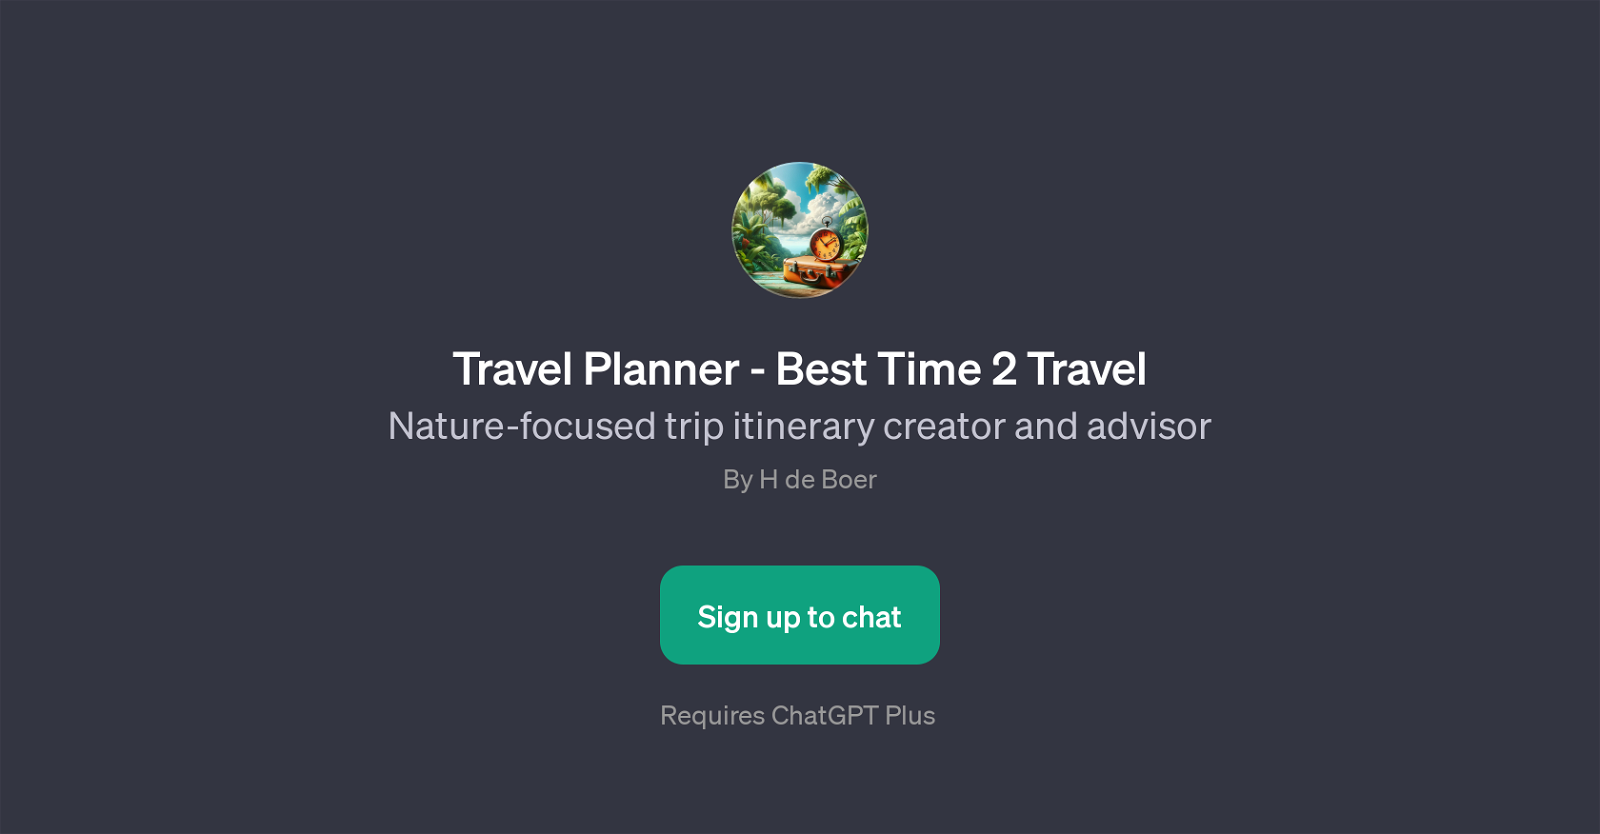 Travel Planner - Best Time 2 Travel website